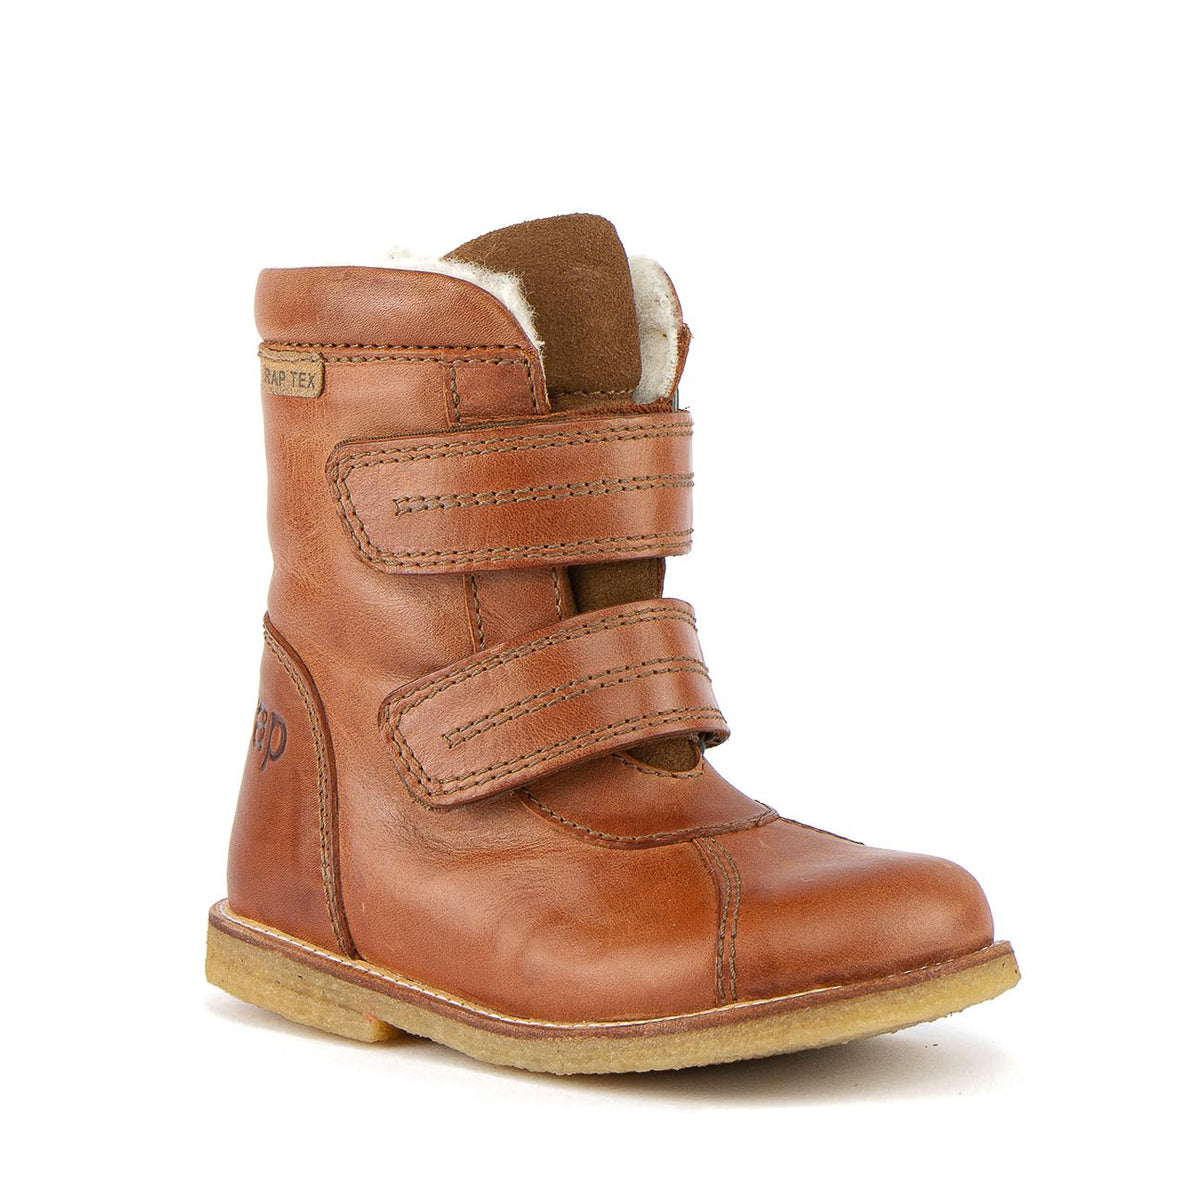 TEX-støvle velcro, Cognac – Pumpkins sko